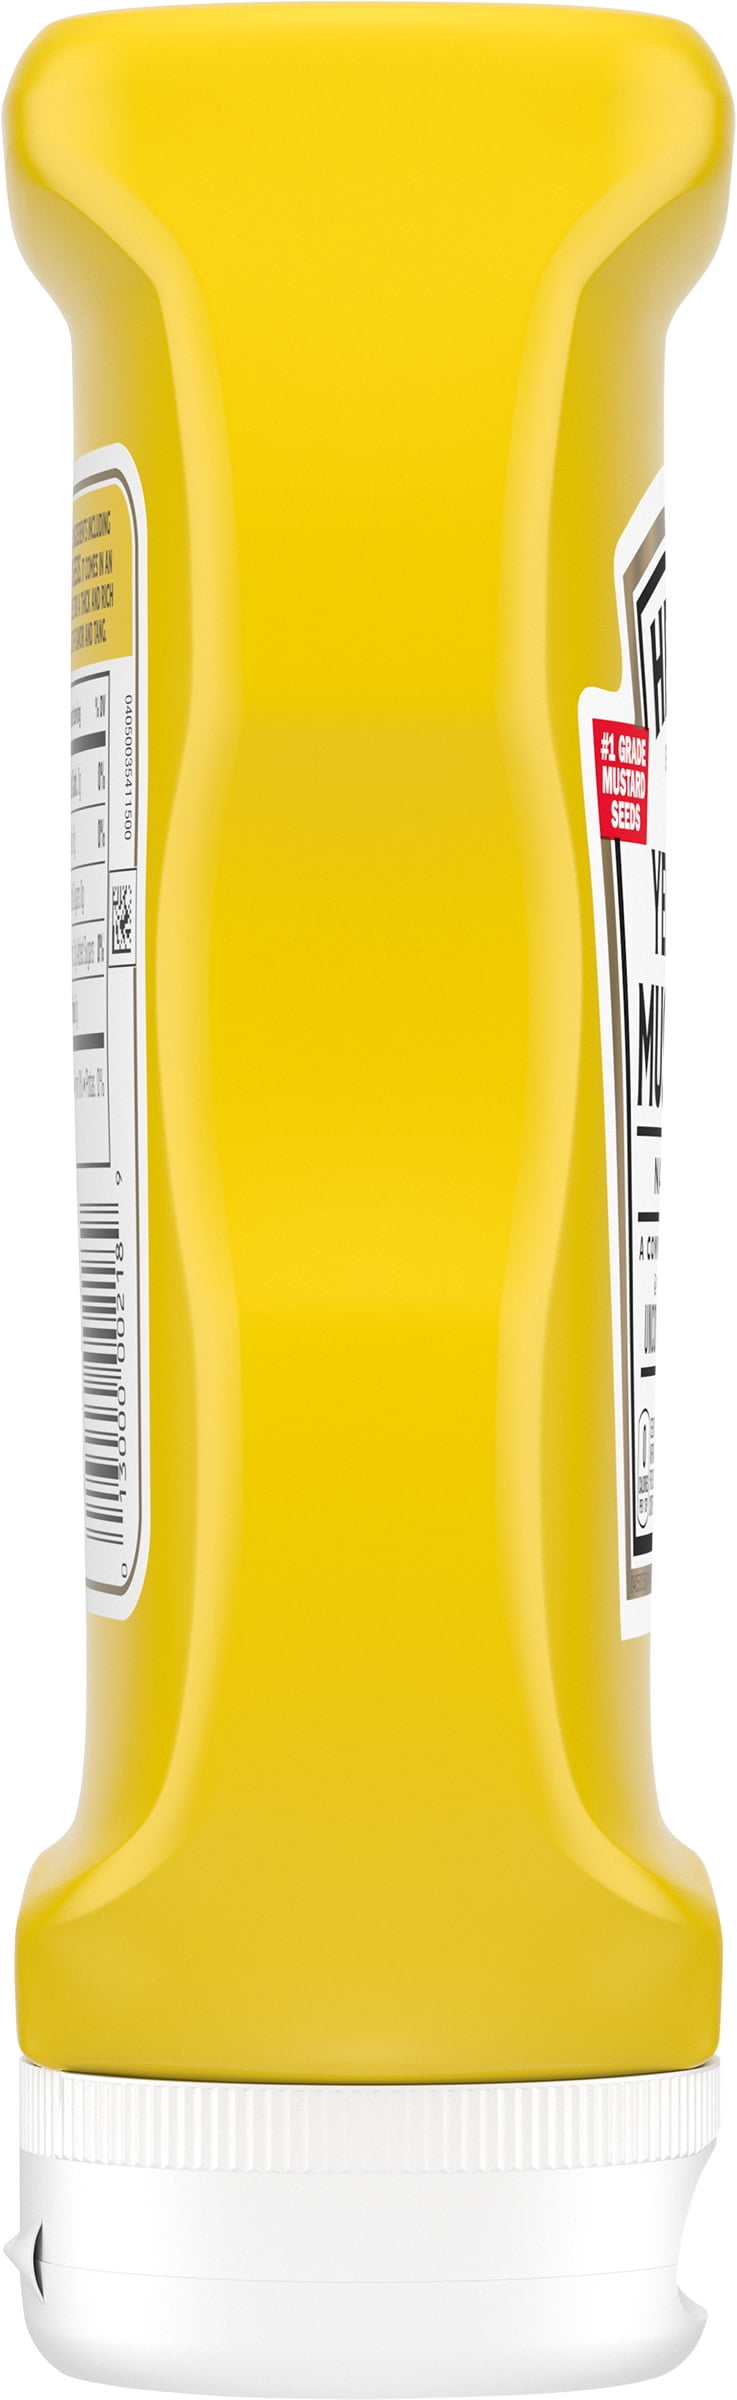 Heinz Yellow Mustard, 20 oz Bottle